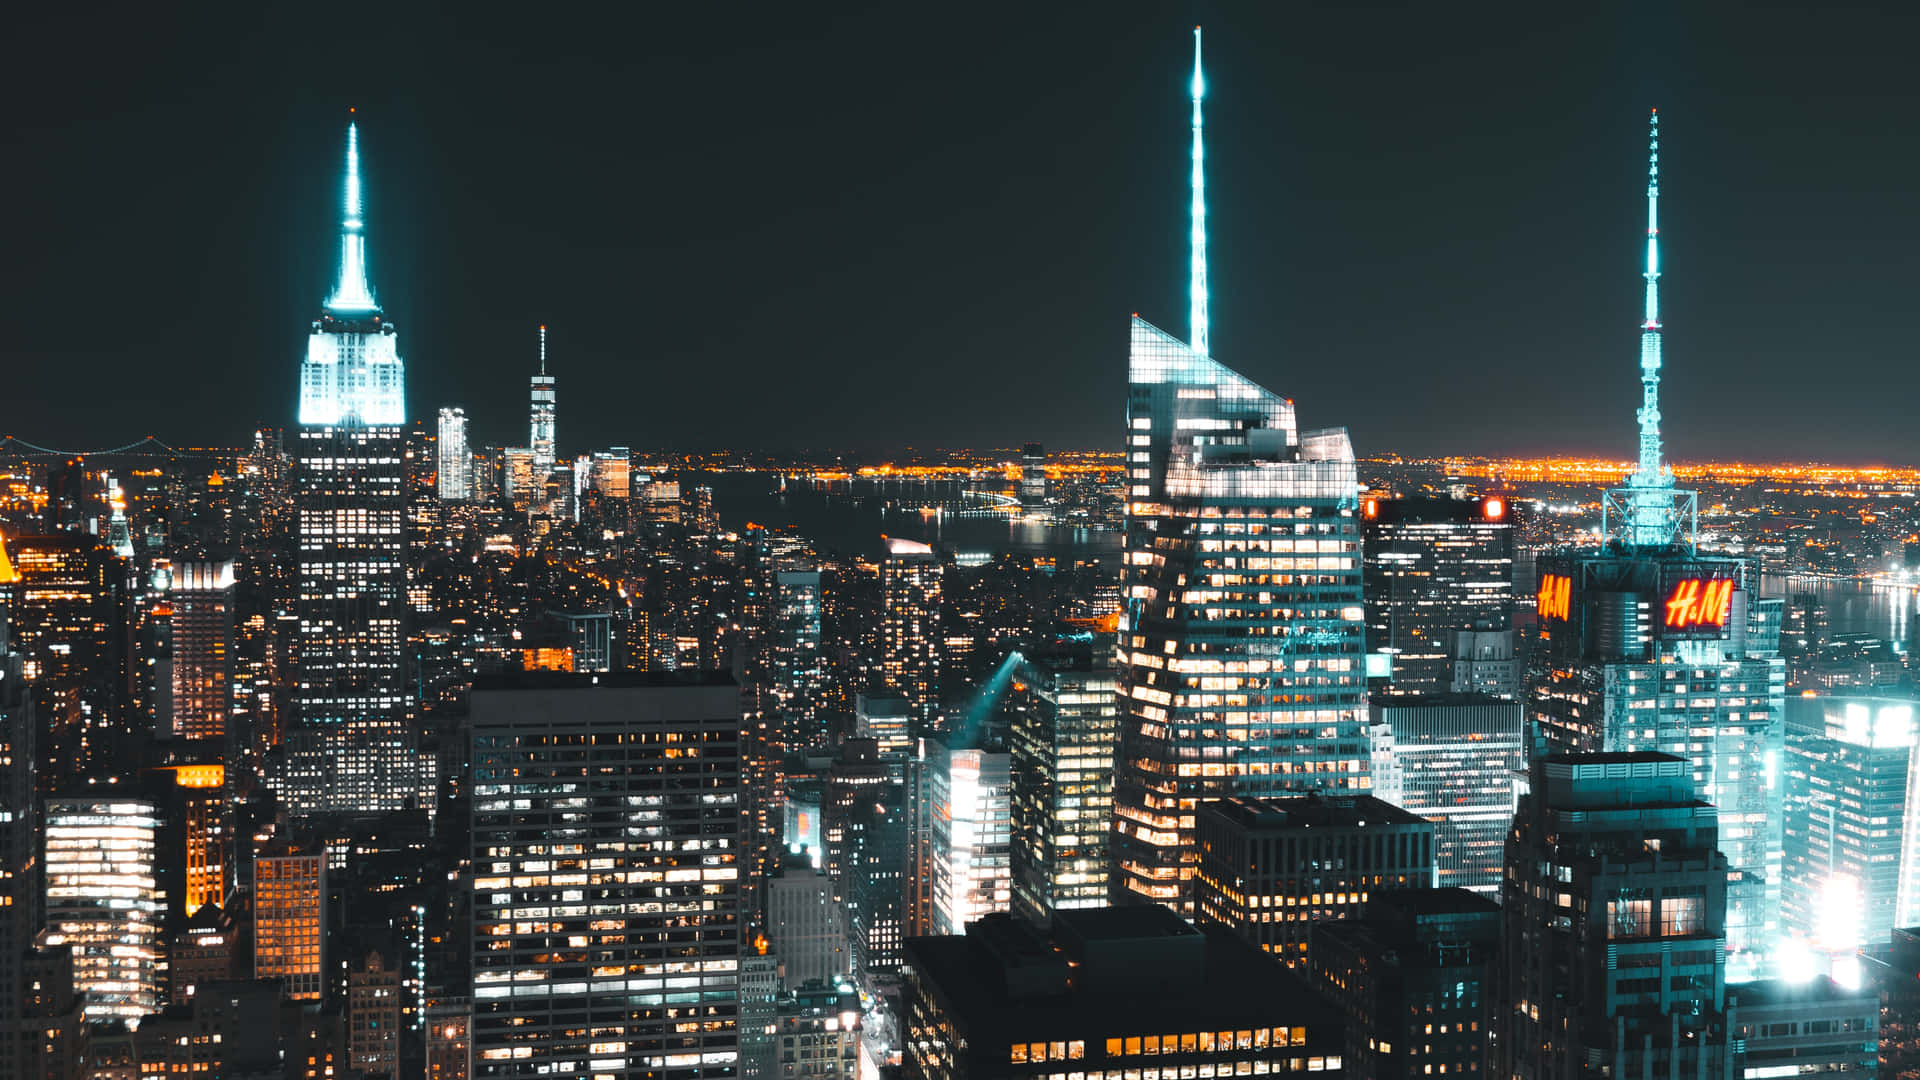 “The towering skyline of New York City.”